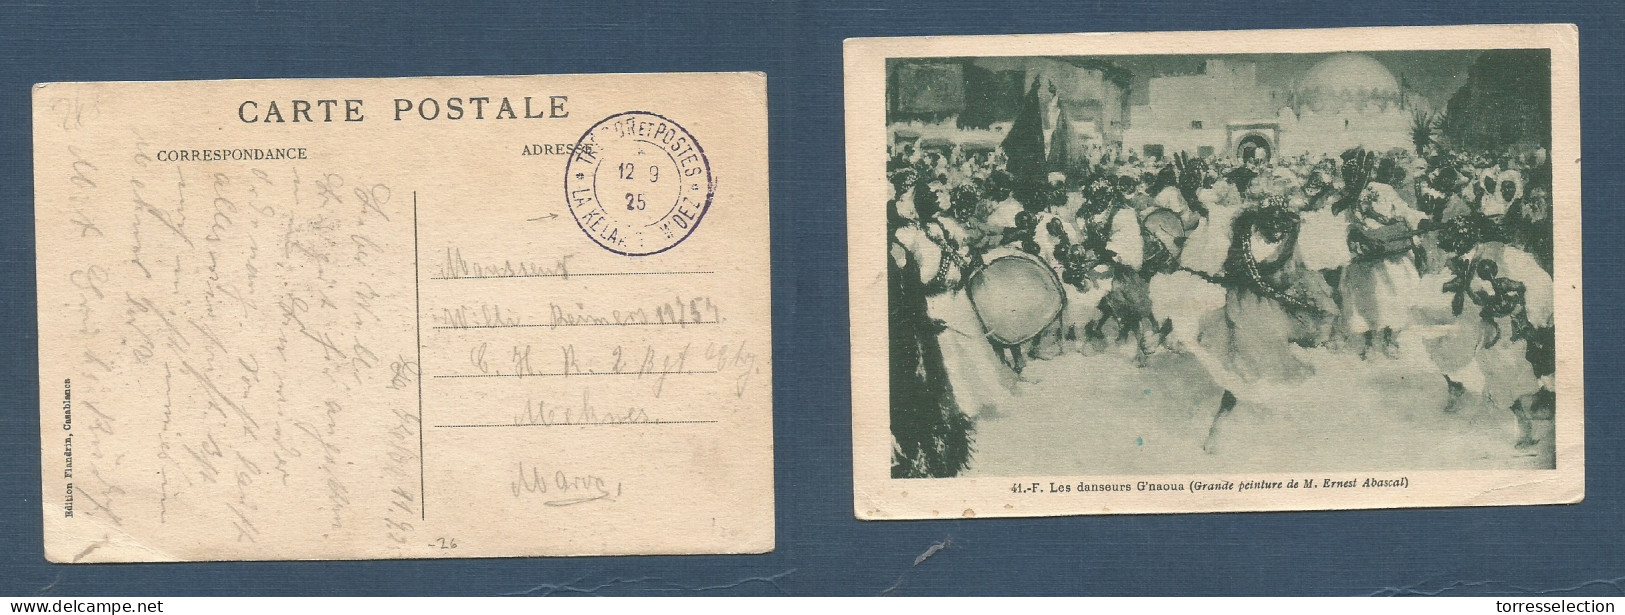 MARRUECOS - French. 1925 (12 Sept) La Kelare M Dez Mekinez. Military FM Violet Cachet. VF. - Maroc (1956-...)